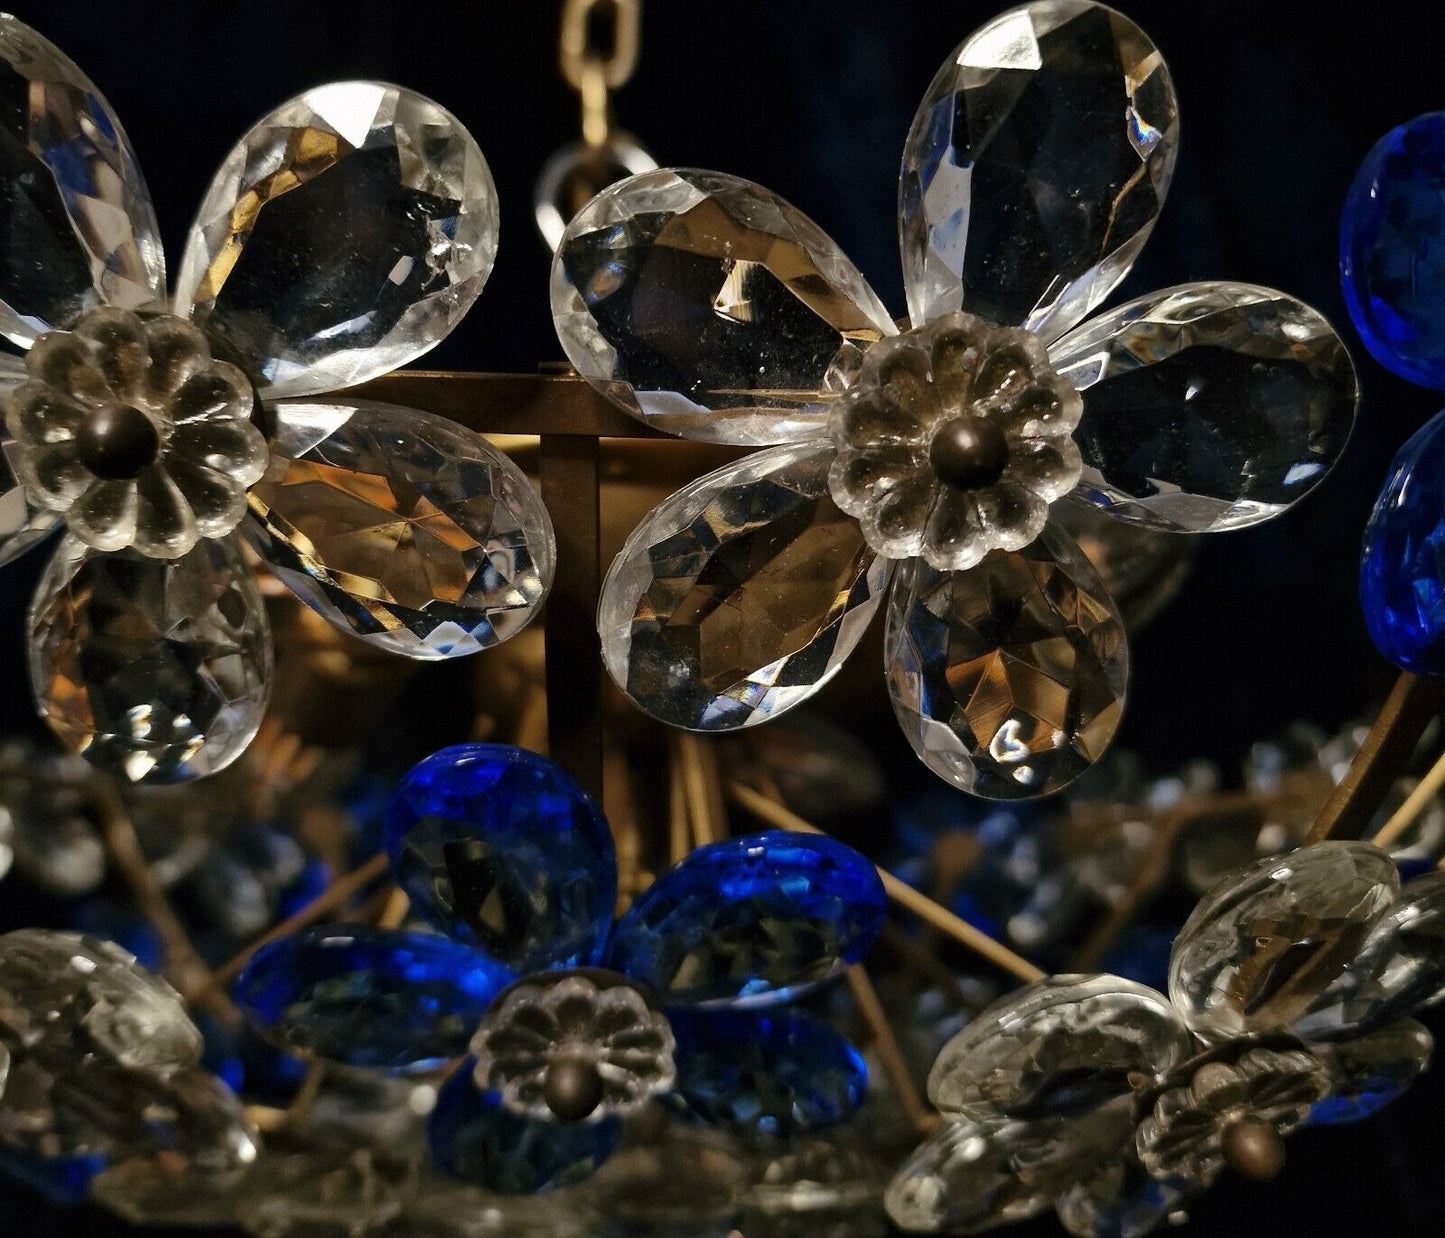 Stunning Mid Century Italian 4 Light Flush Plafonnier Flower Crystal Chandelier